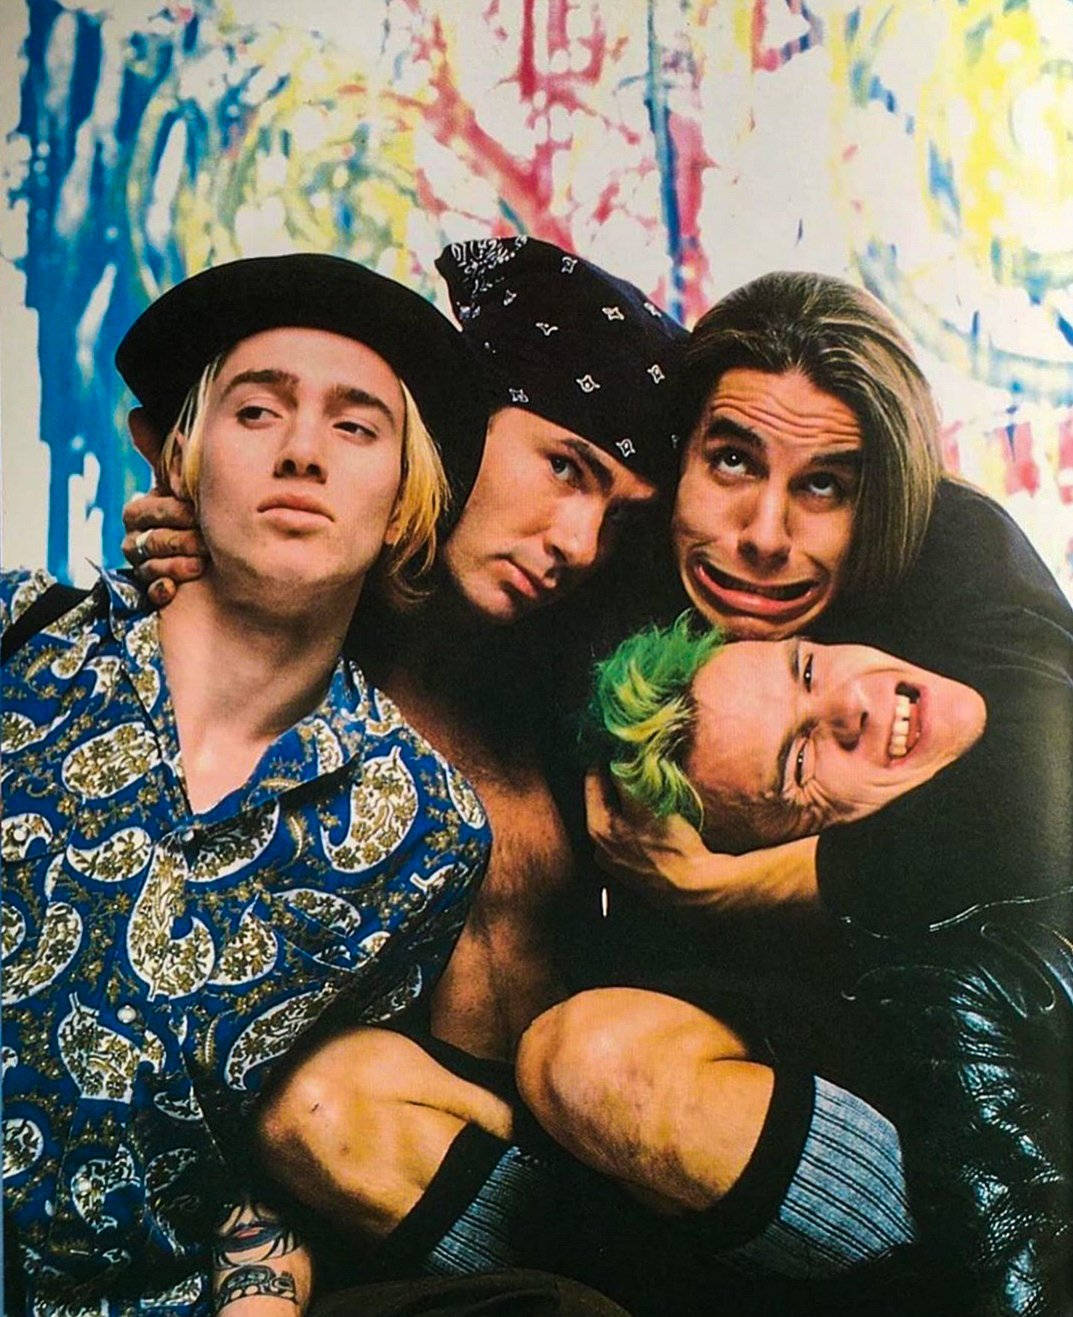 Группа ред хот Чили пеперс. Ред хот Чили Пепперс в молодости. Red hot Chili Peppers 90s. Red hot Chili Peppers 90-е. Ред холи пеперс